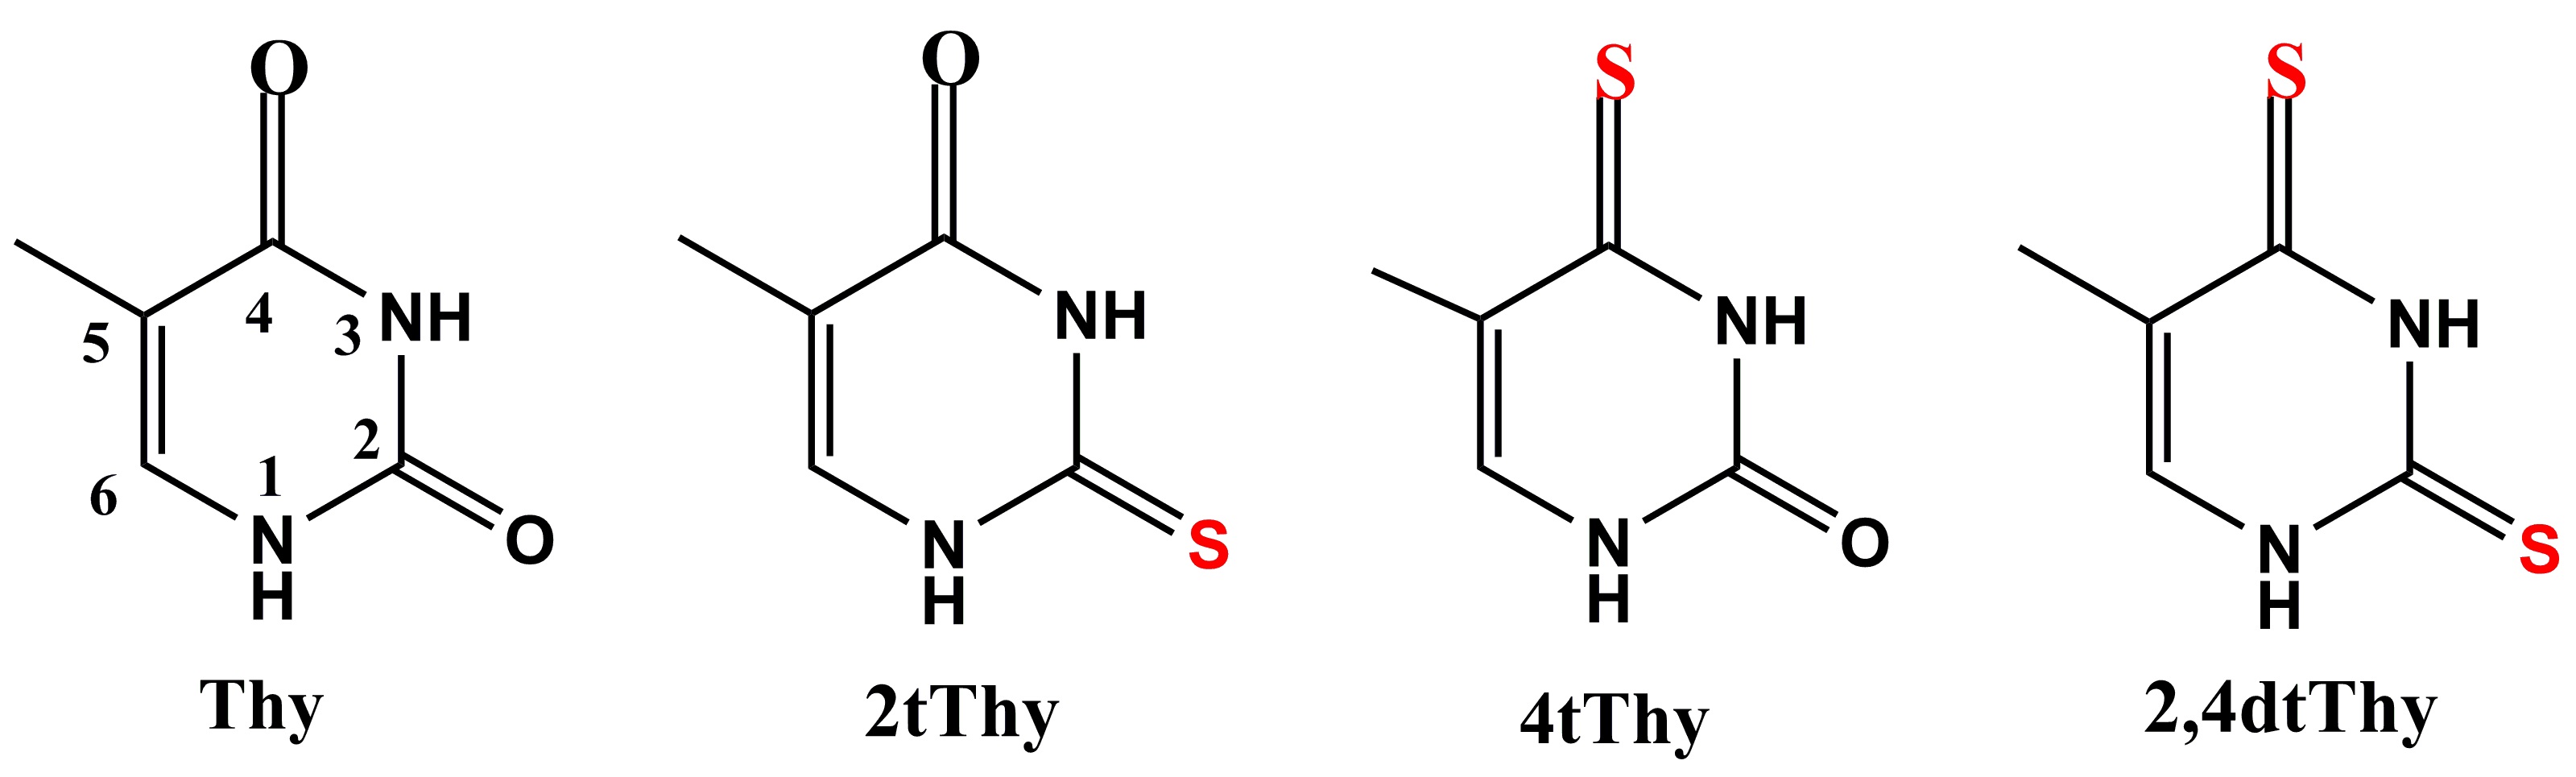 thiothymines